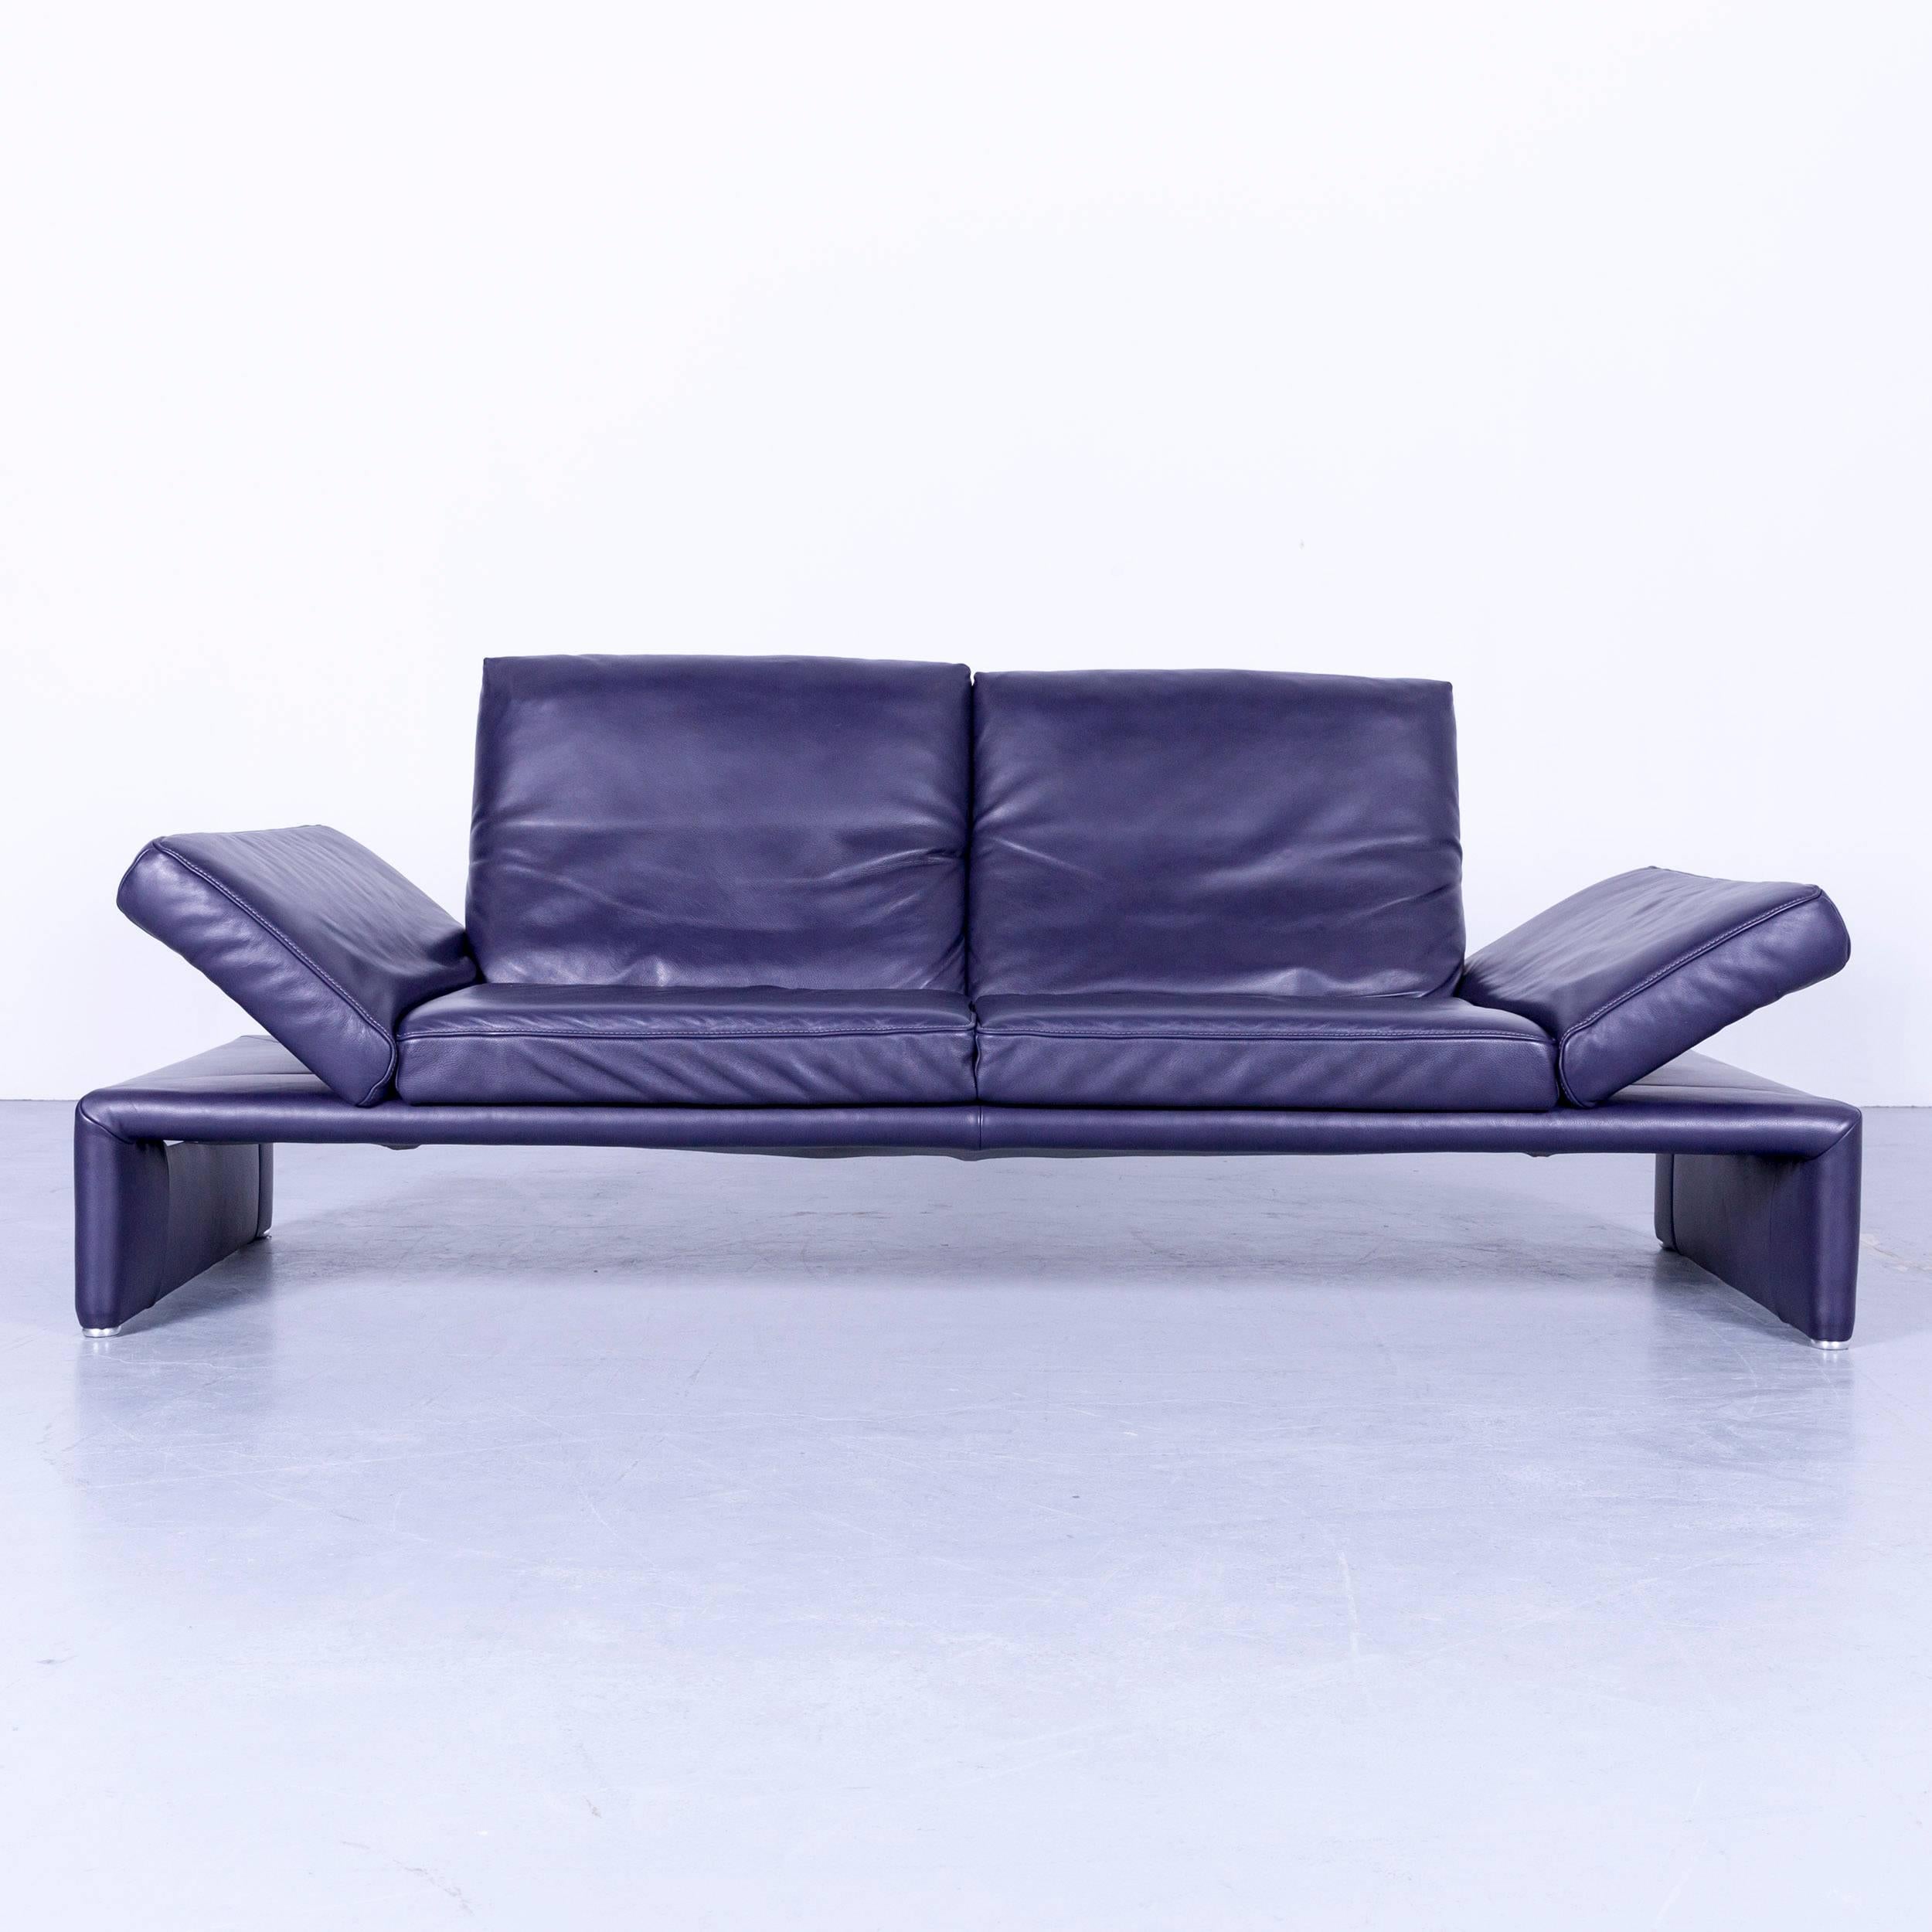 Koinor Raoul Designer Sofa Set Purple Eggplant Leather Three-Seat Couch 2